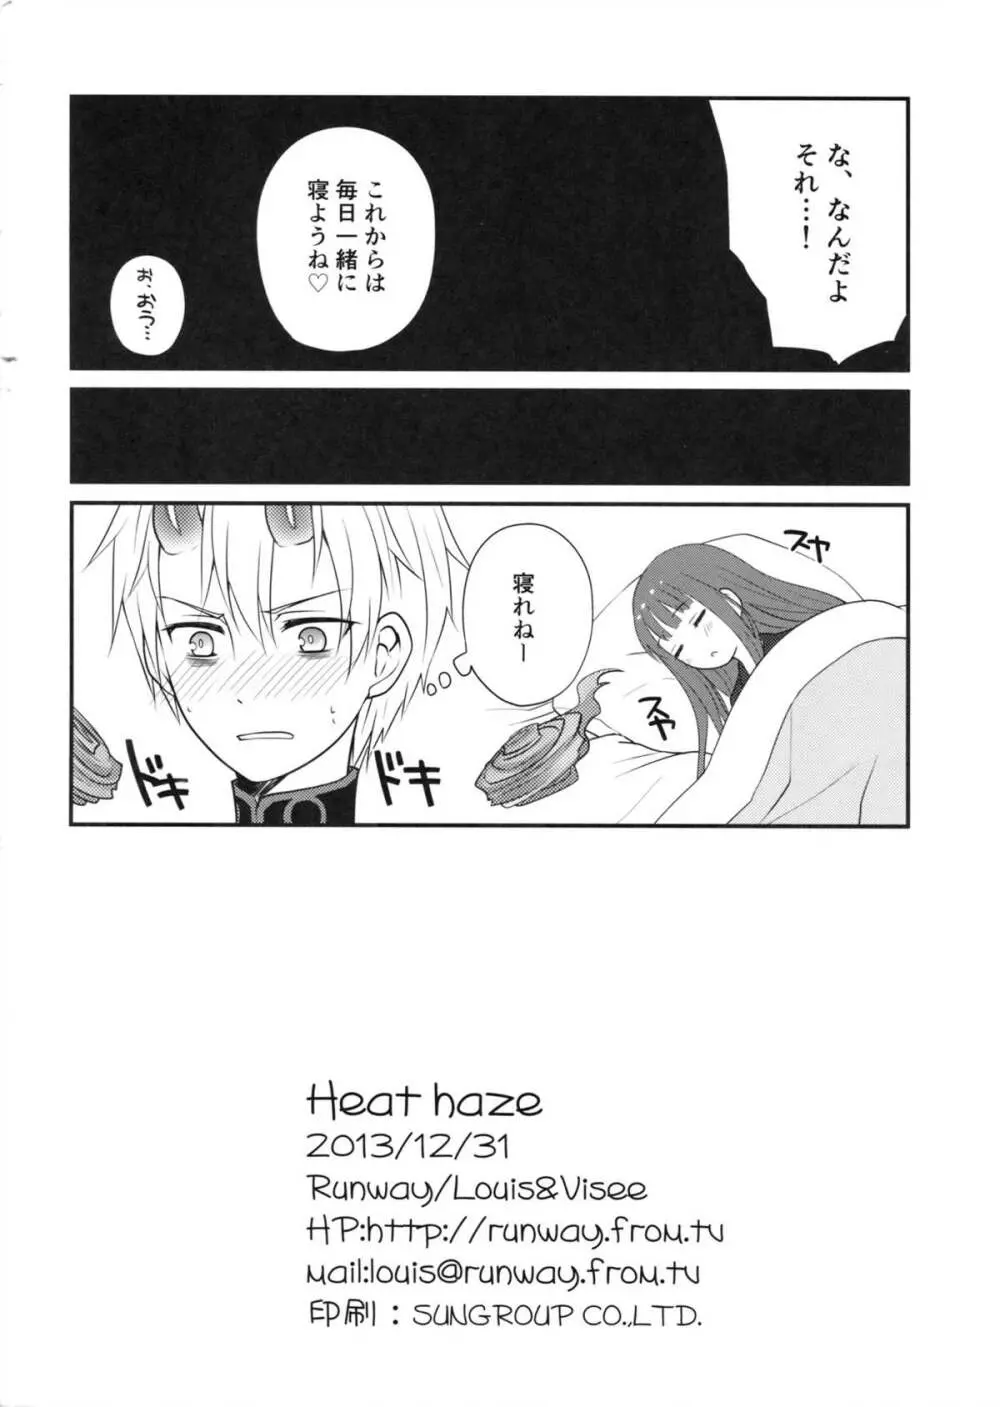 Heat haze - page25